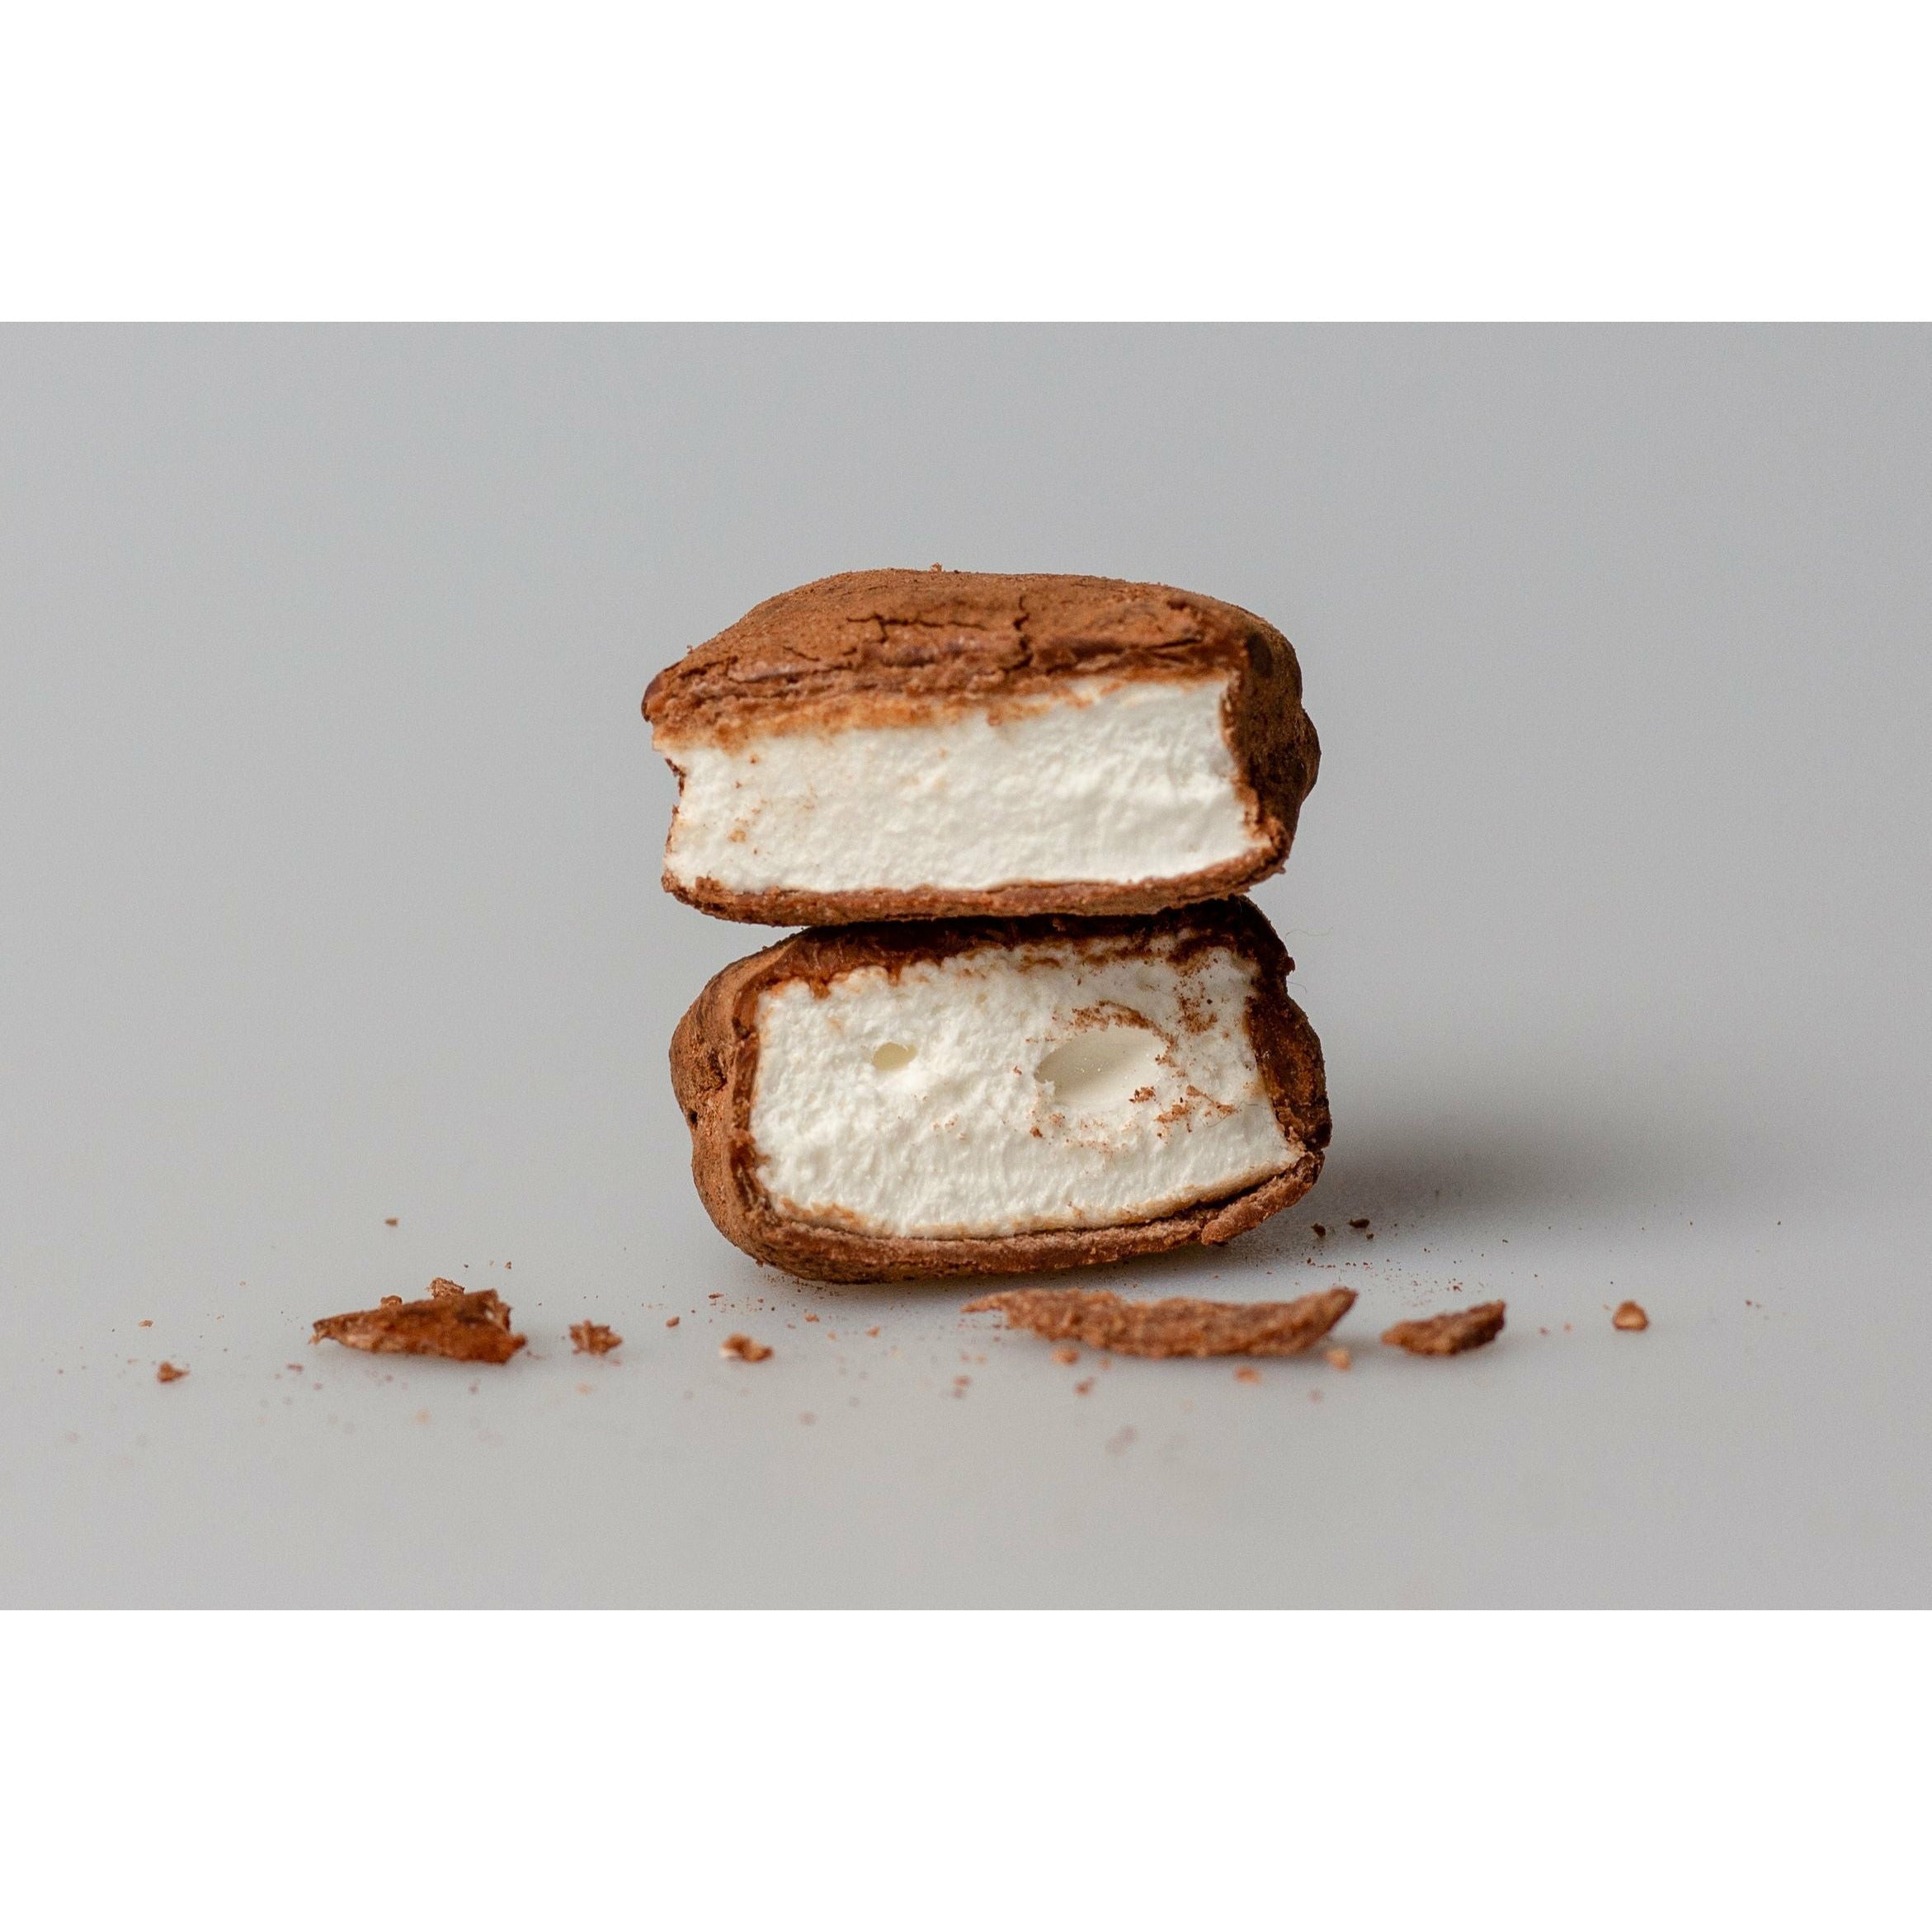 Mallows marshmallows se solenou karamelem a čokoládou, 150 g